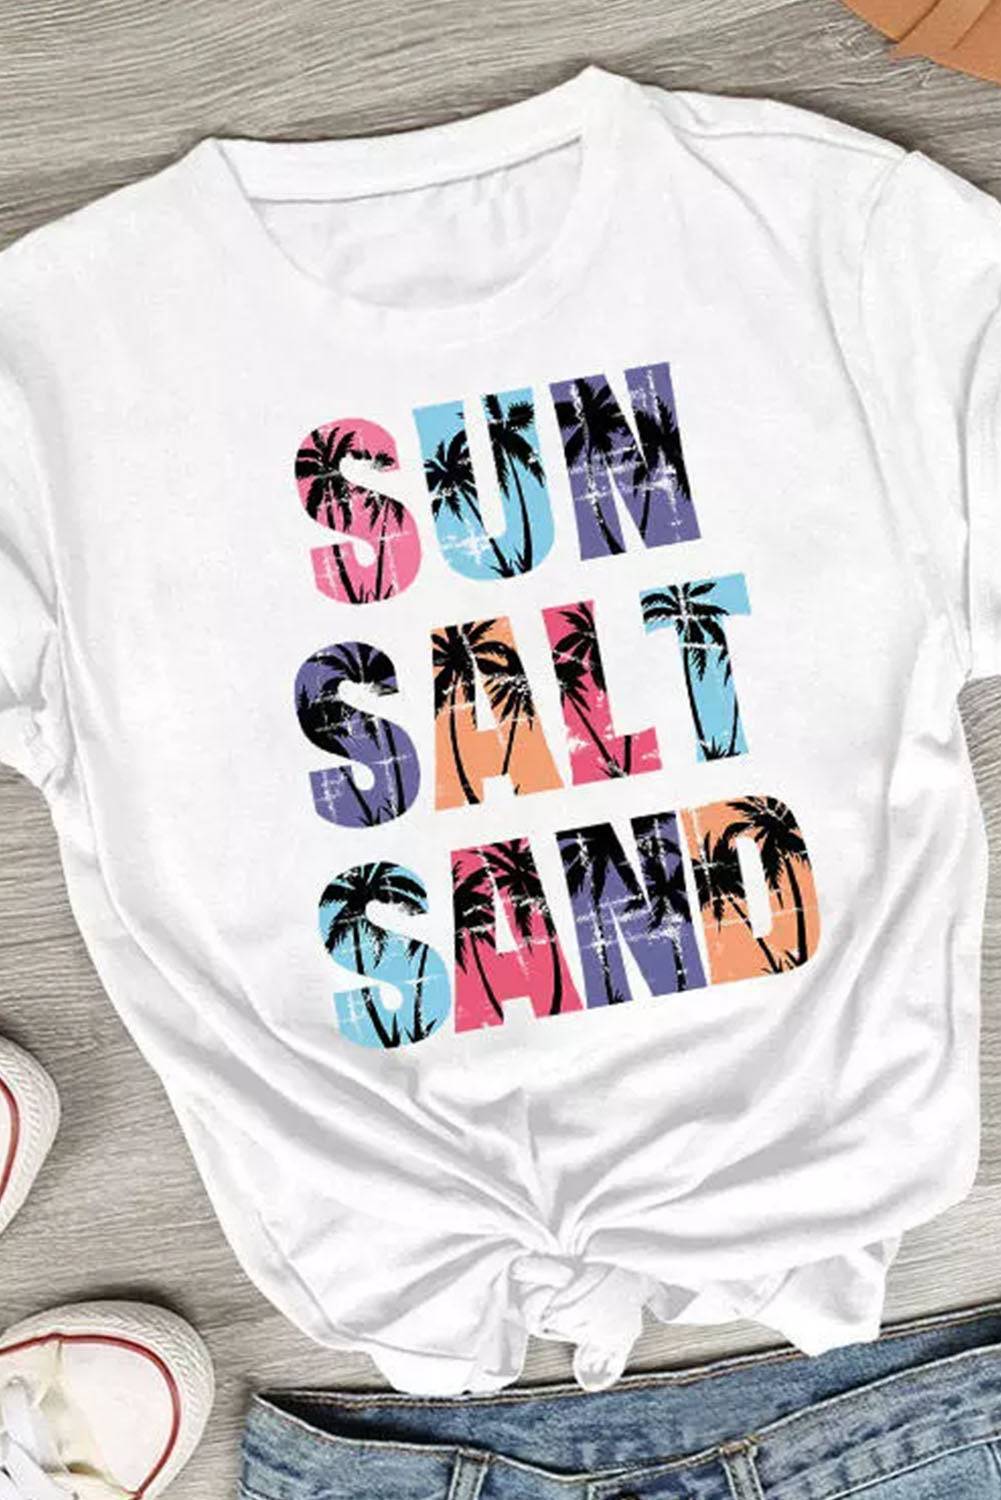 a t - shirt that says sun, salt, sand and palm trees